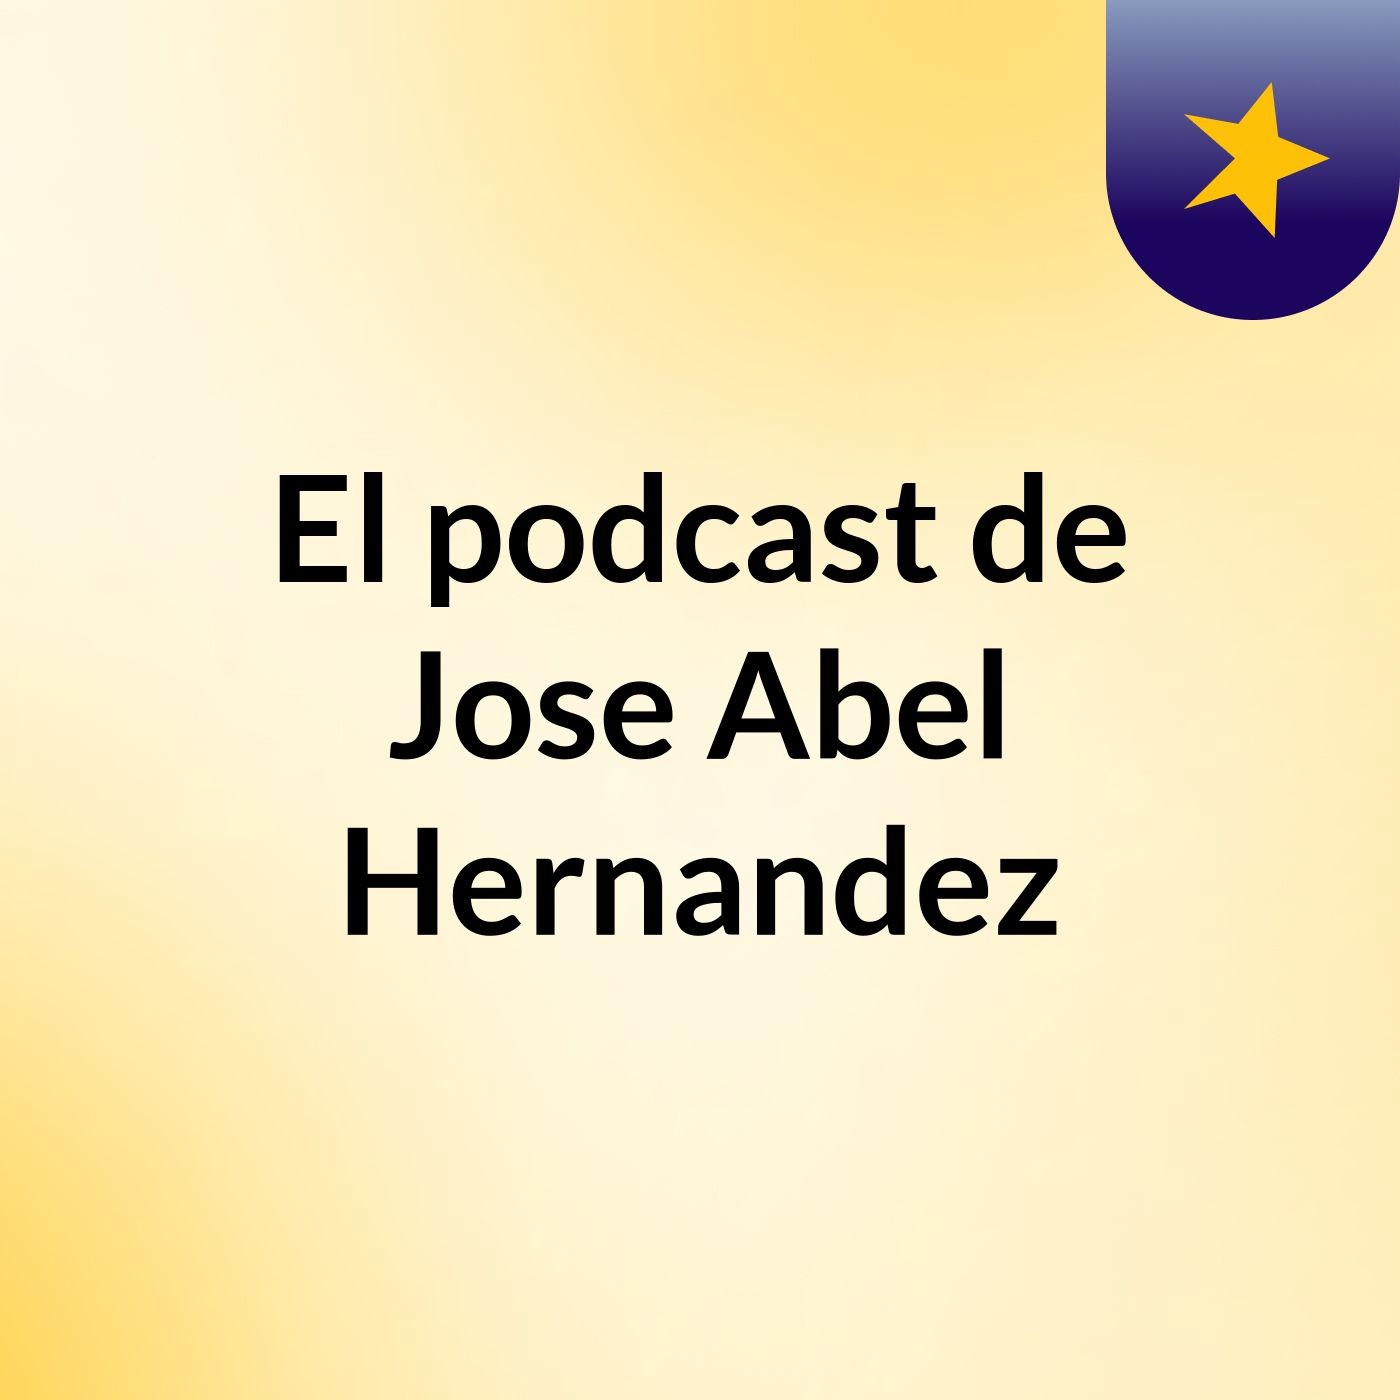 El podcast de Jose Abel Hernandez